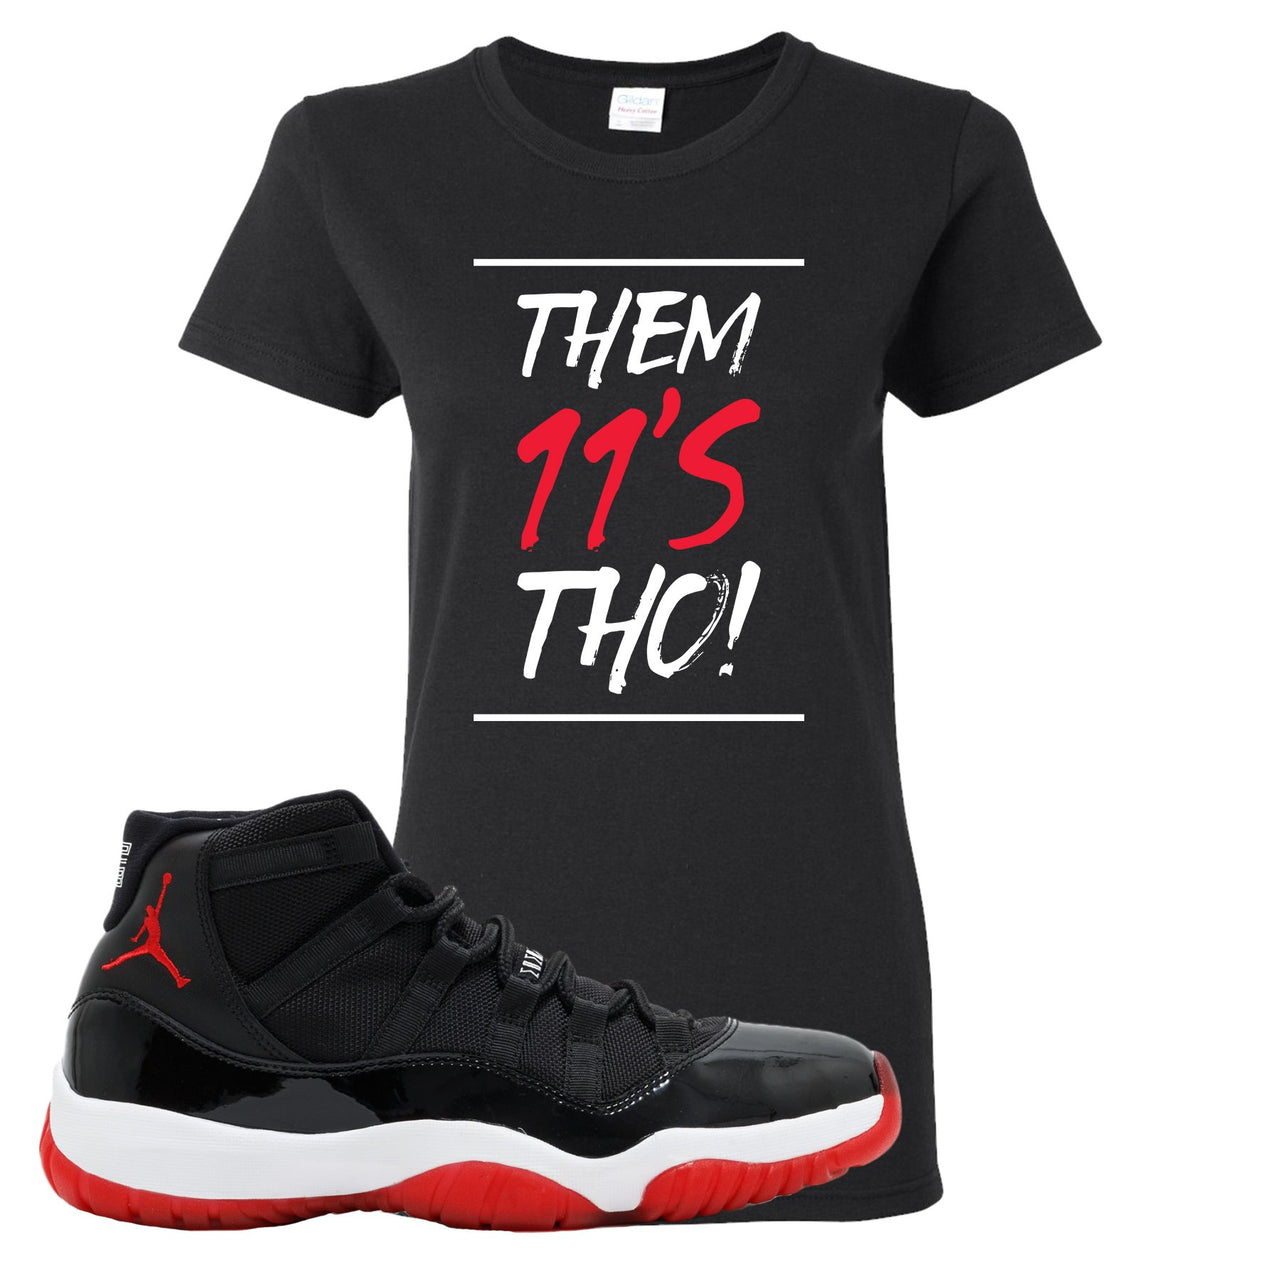 Jordan 11 Bred Them 11s Tho! Black Sneaker Hook Up Women's T-Shirt